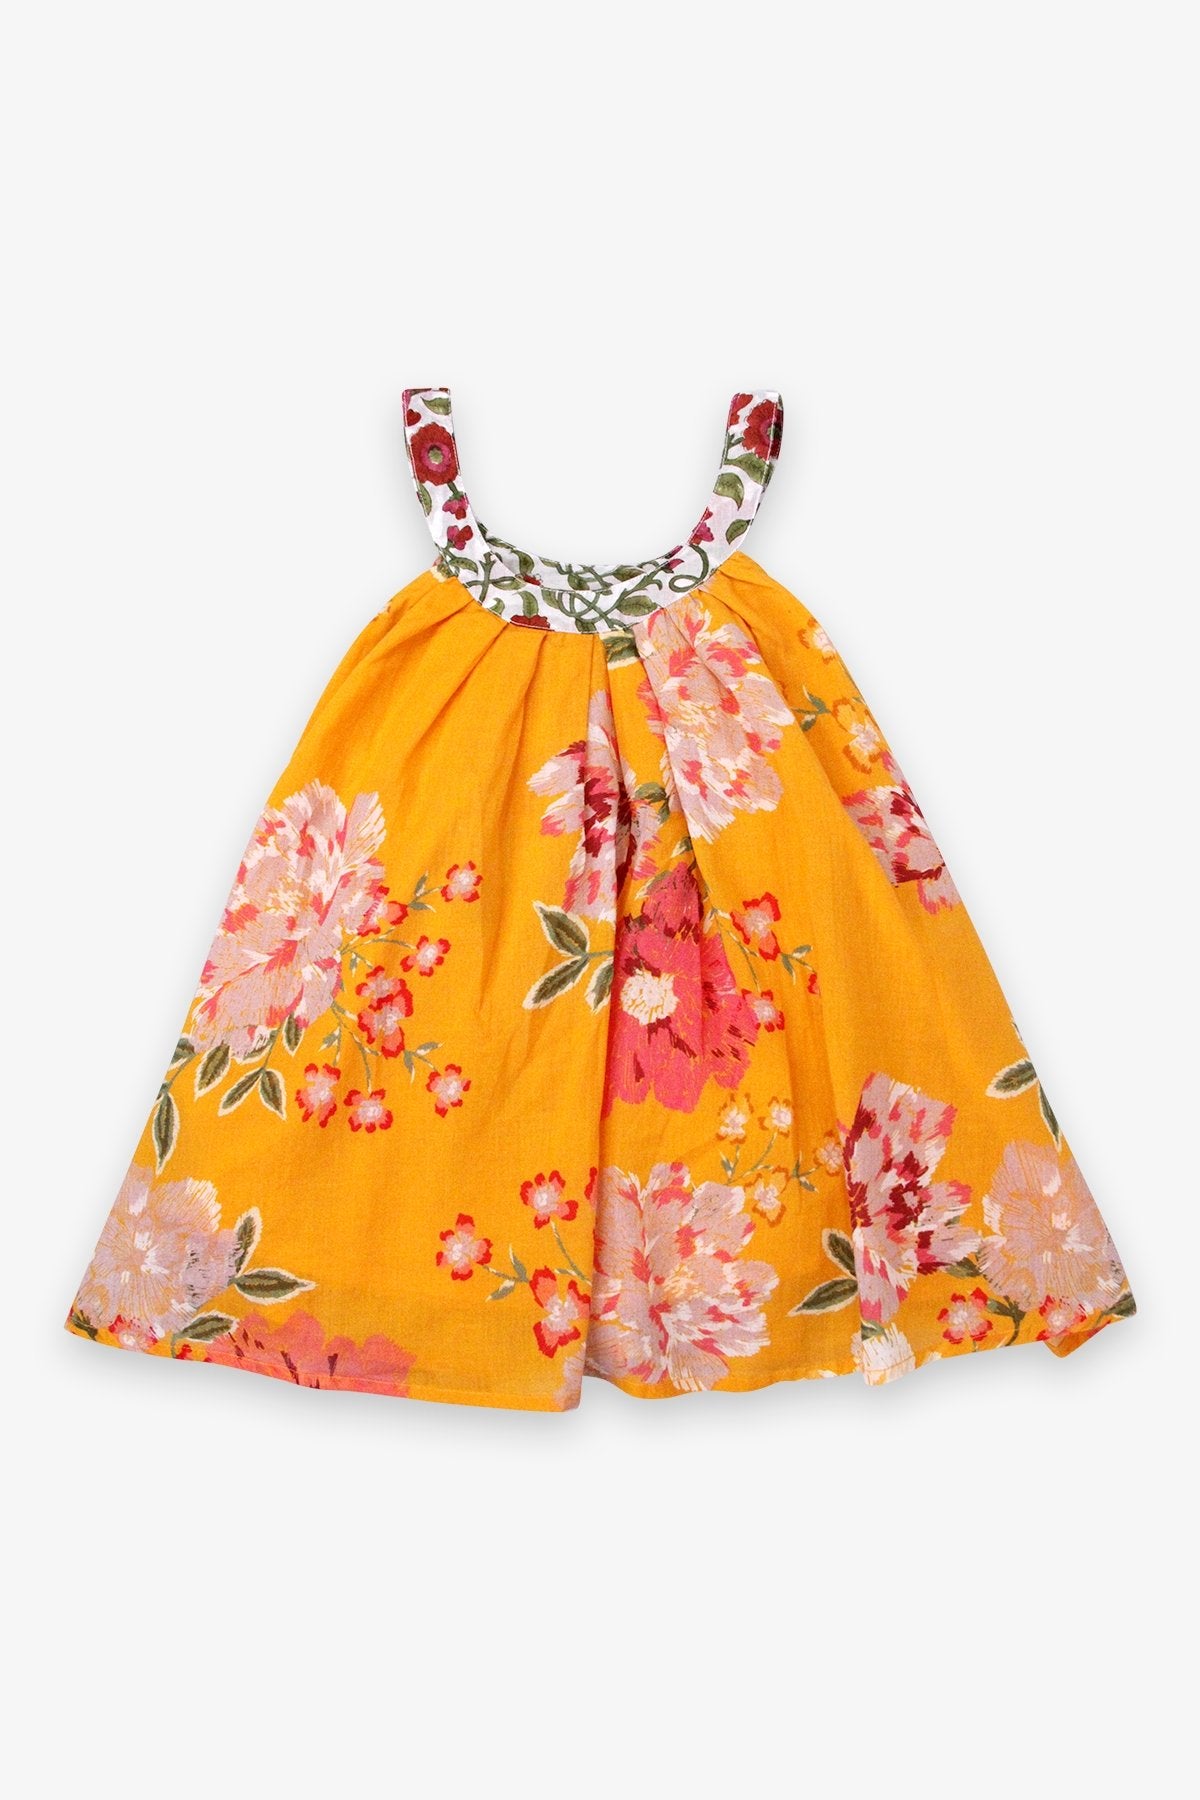 Girls Semara Rimini Dress in Orange - shop-olivia.com